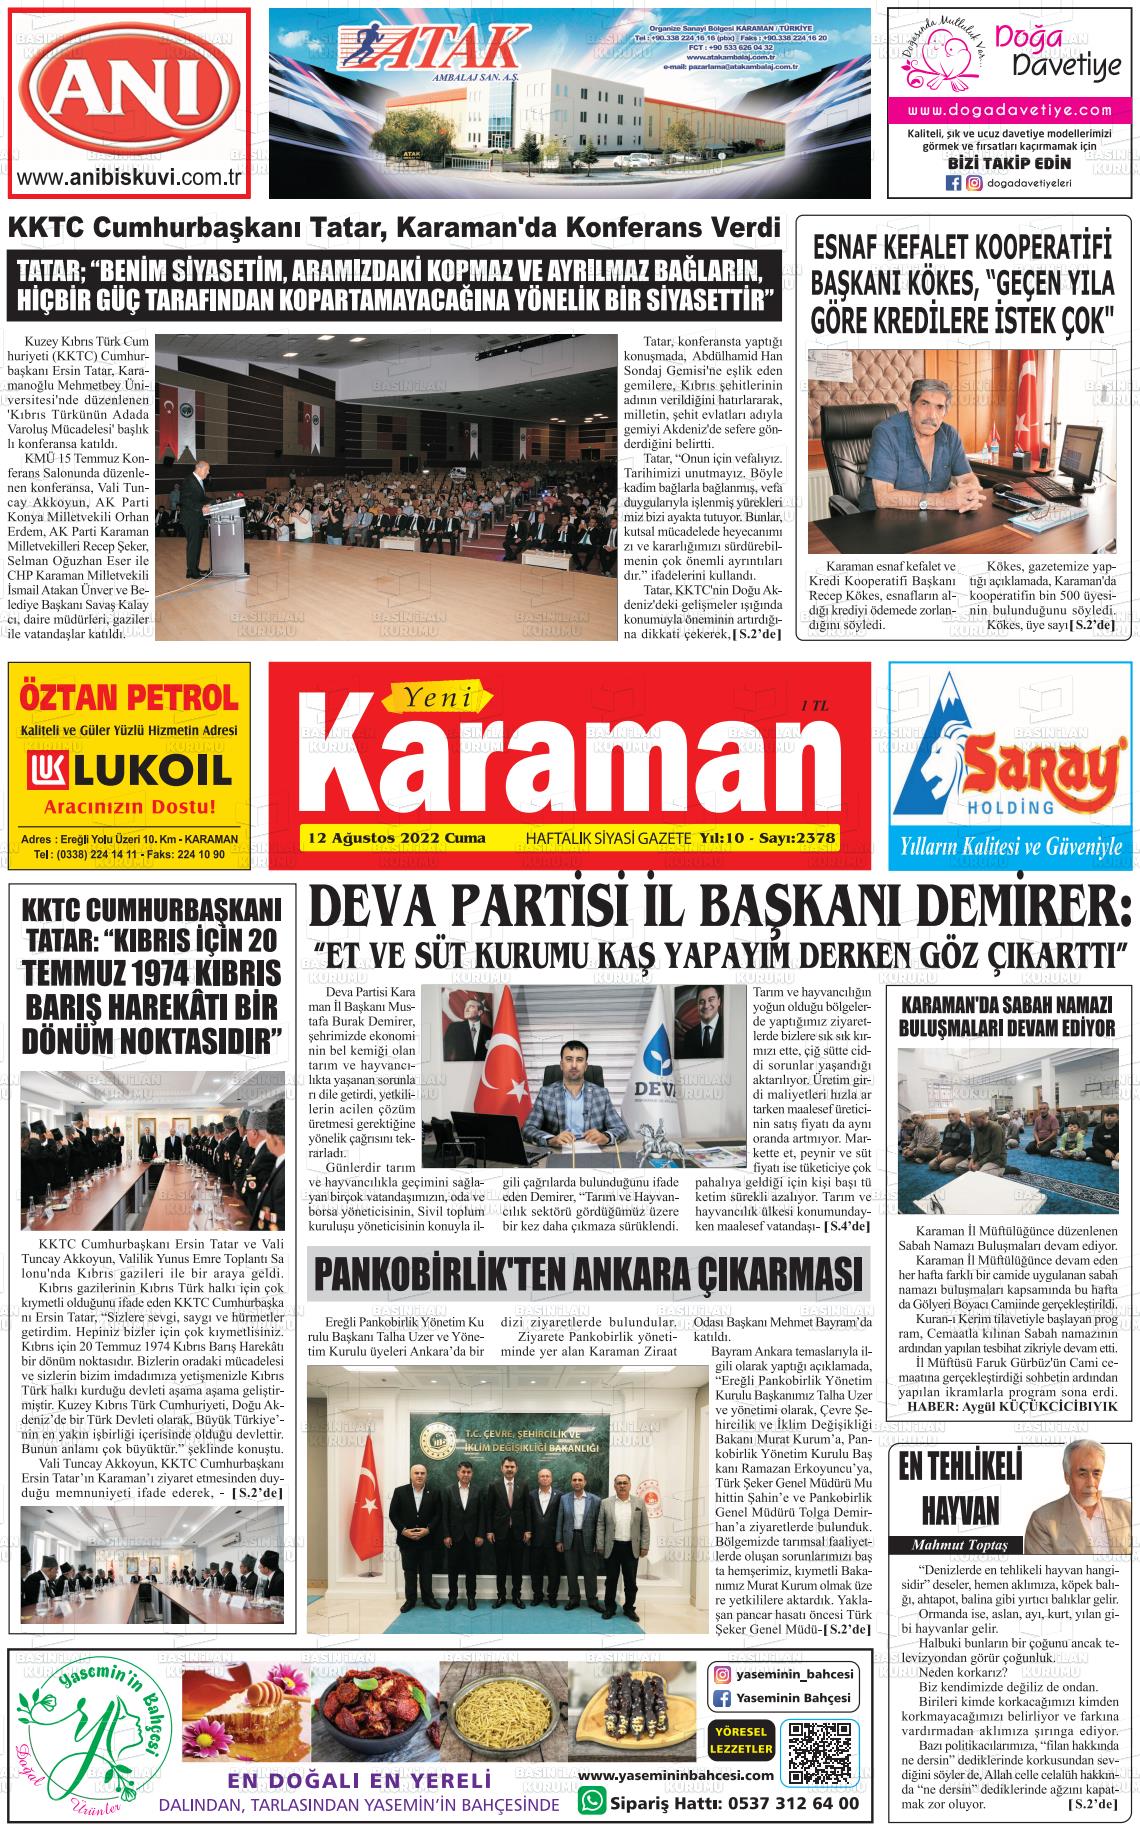 12 Ağustos 2022 Yeni Karaman Gazete Manşeti